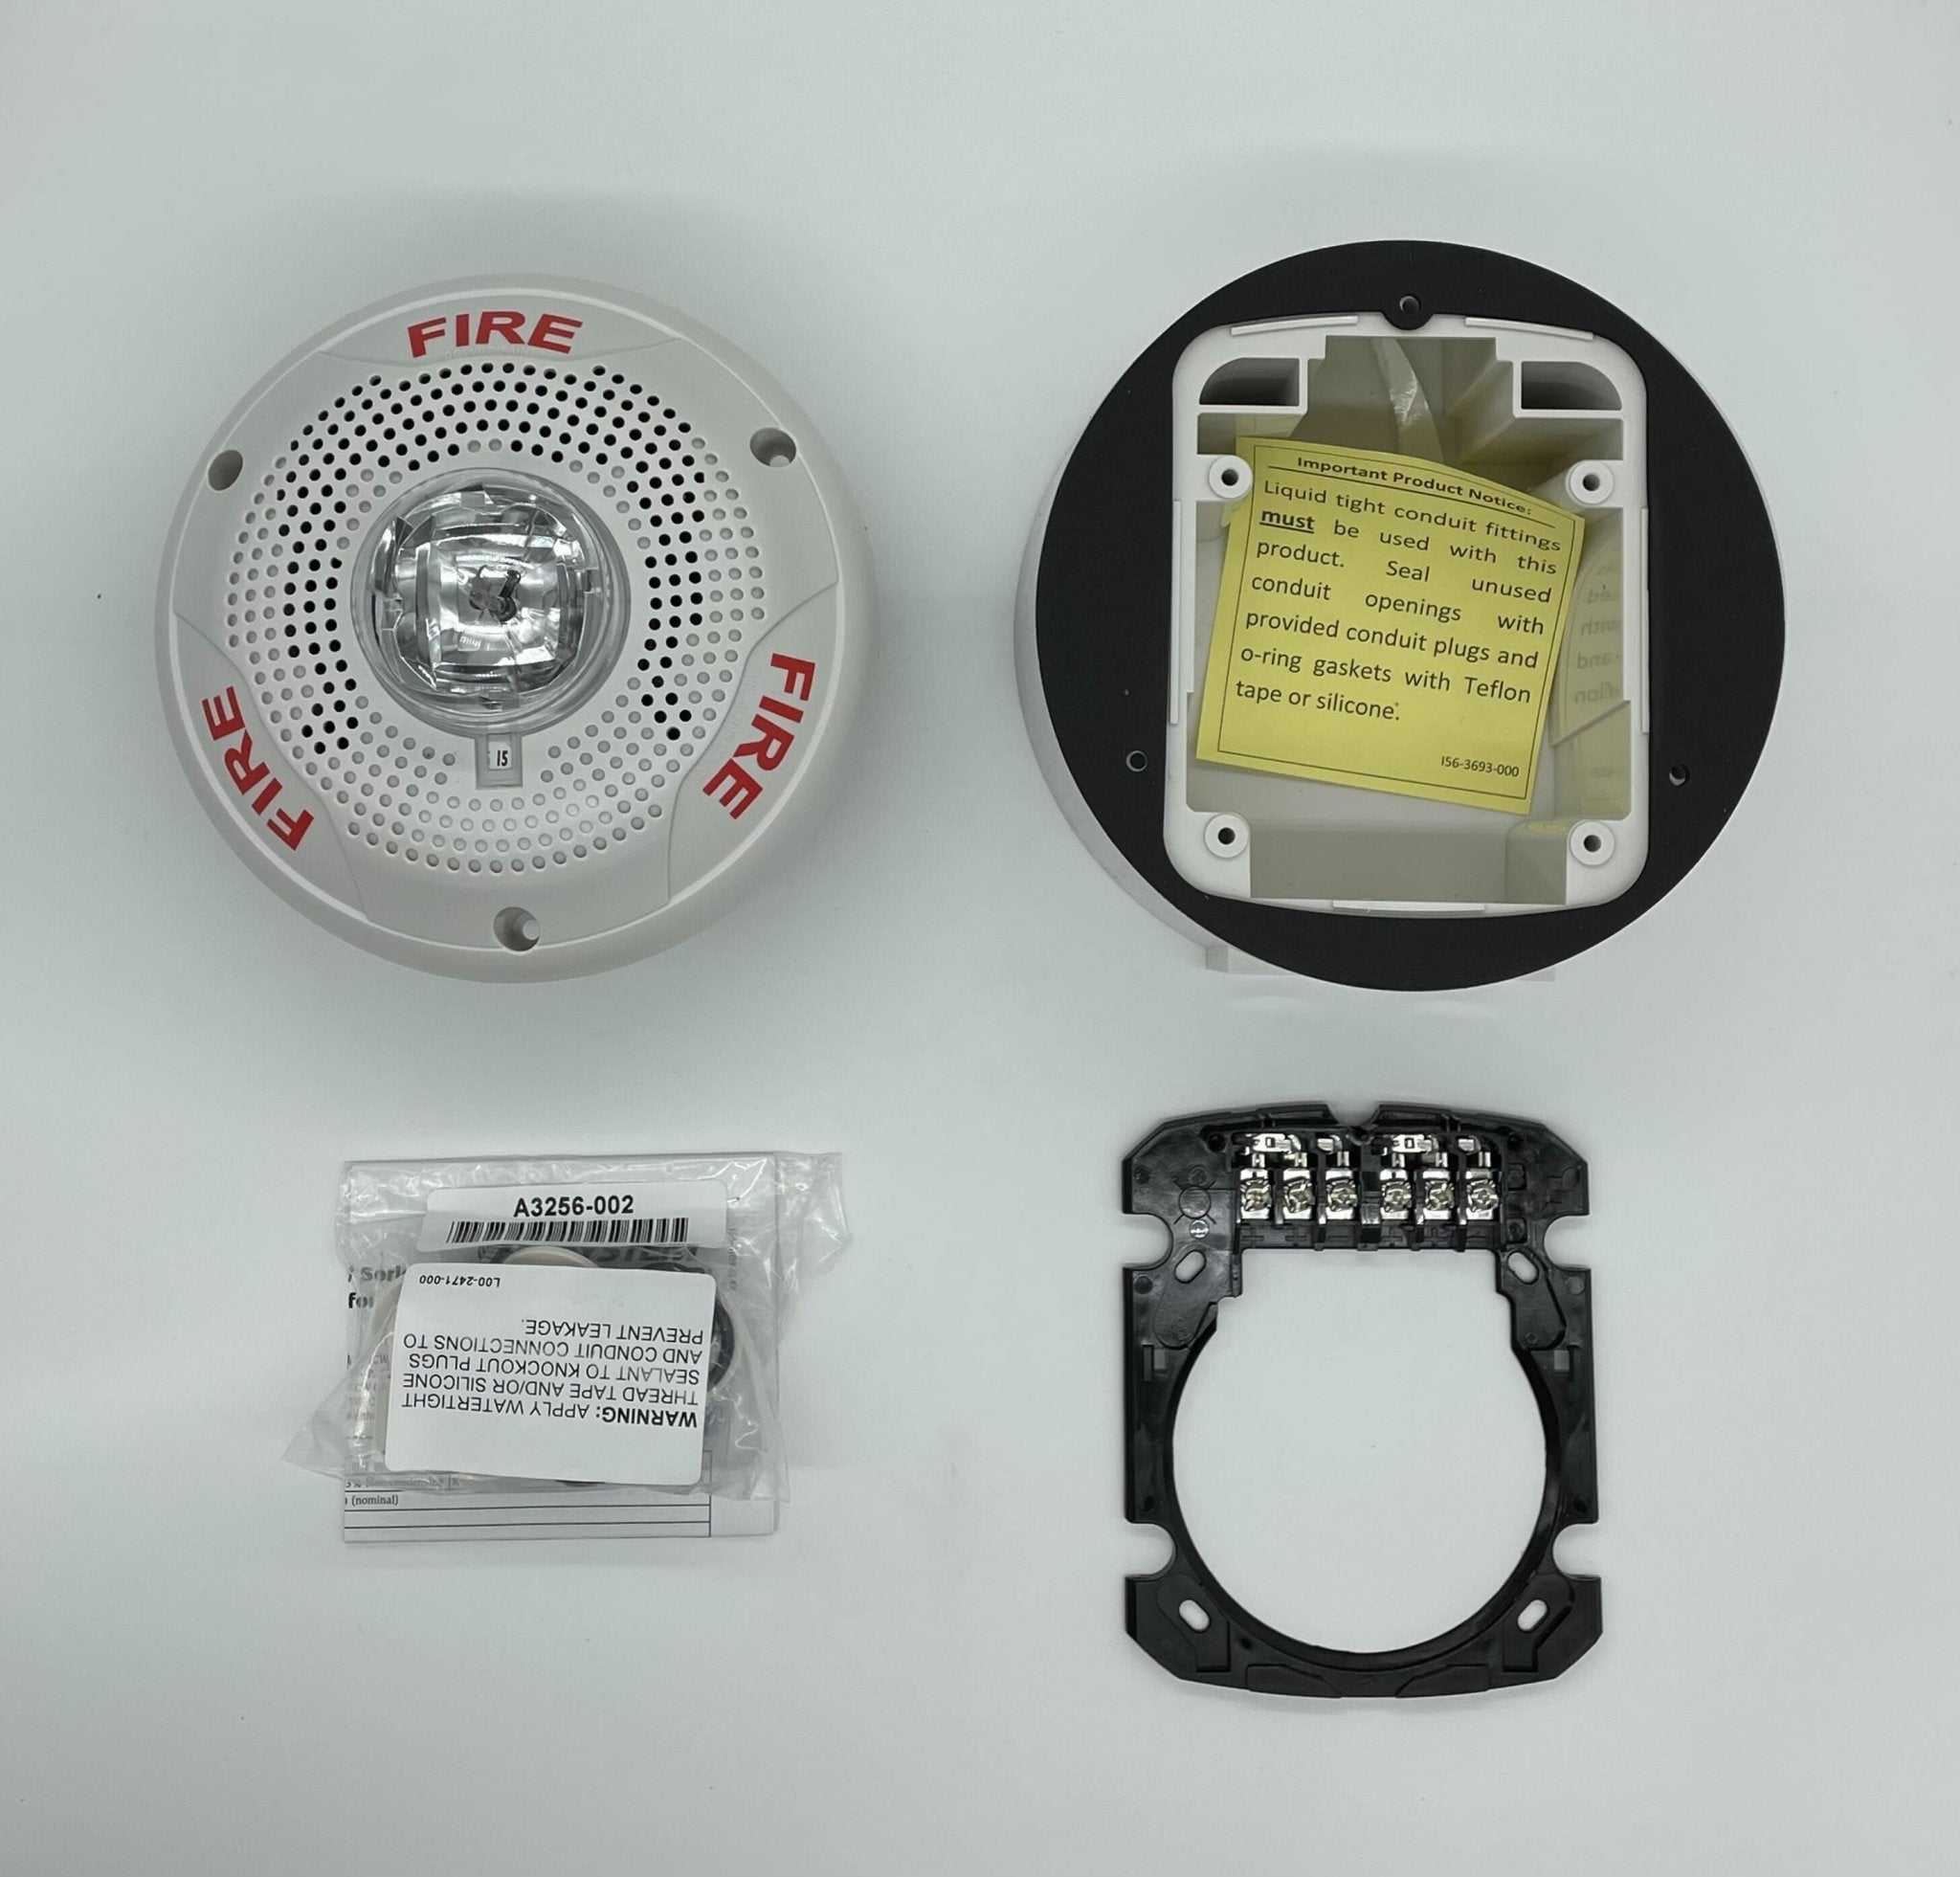 System Sensor SPSCWK - The Fire Alarm Supplier